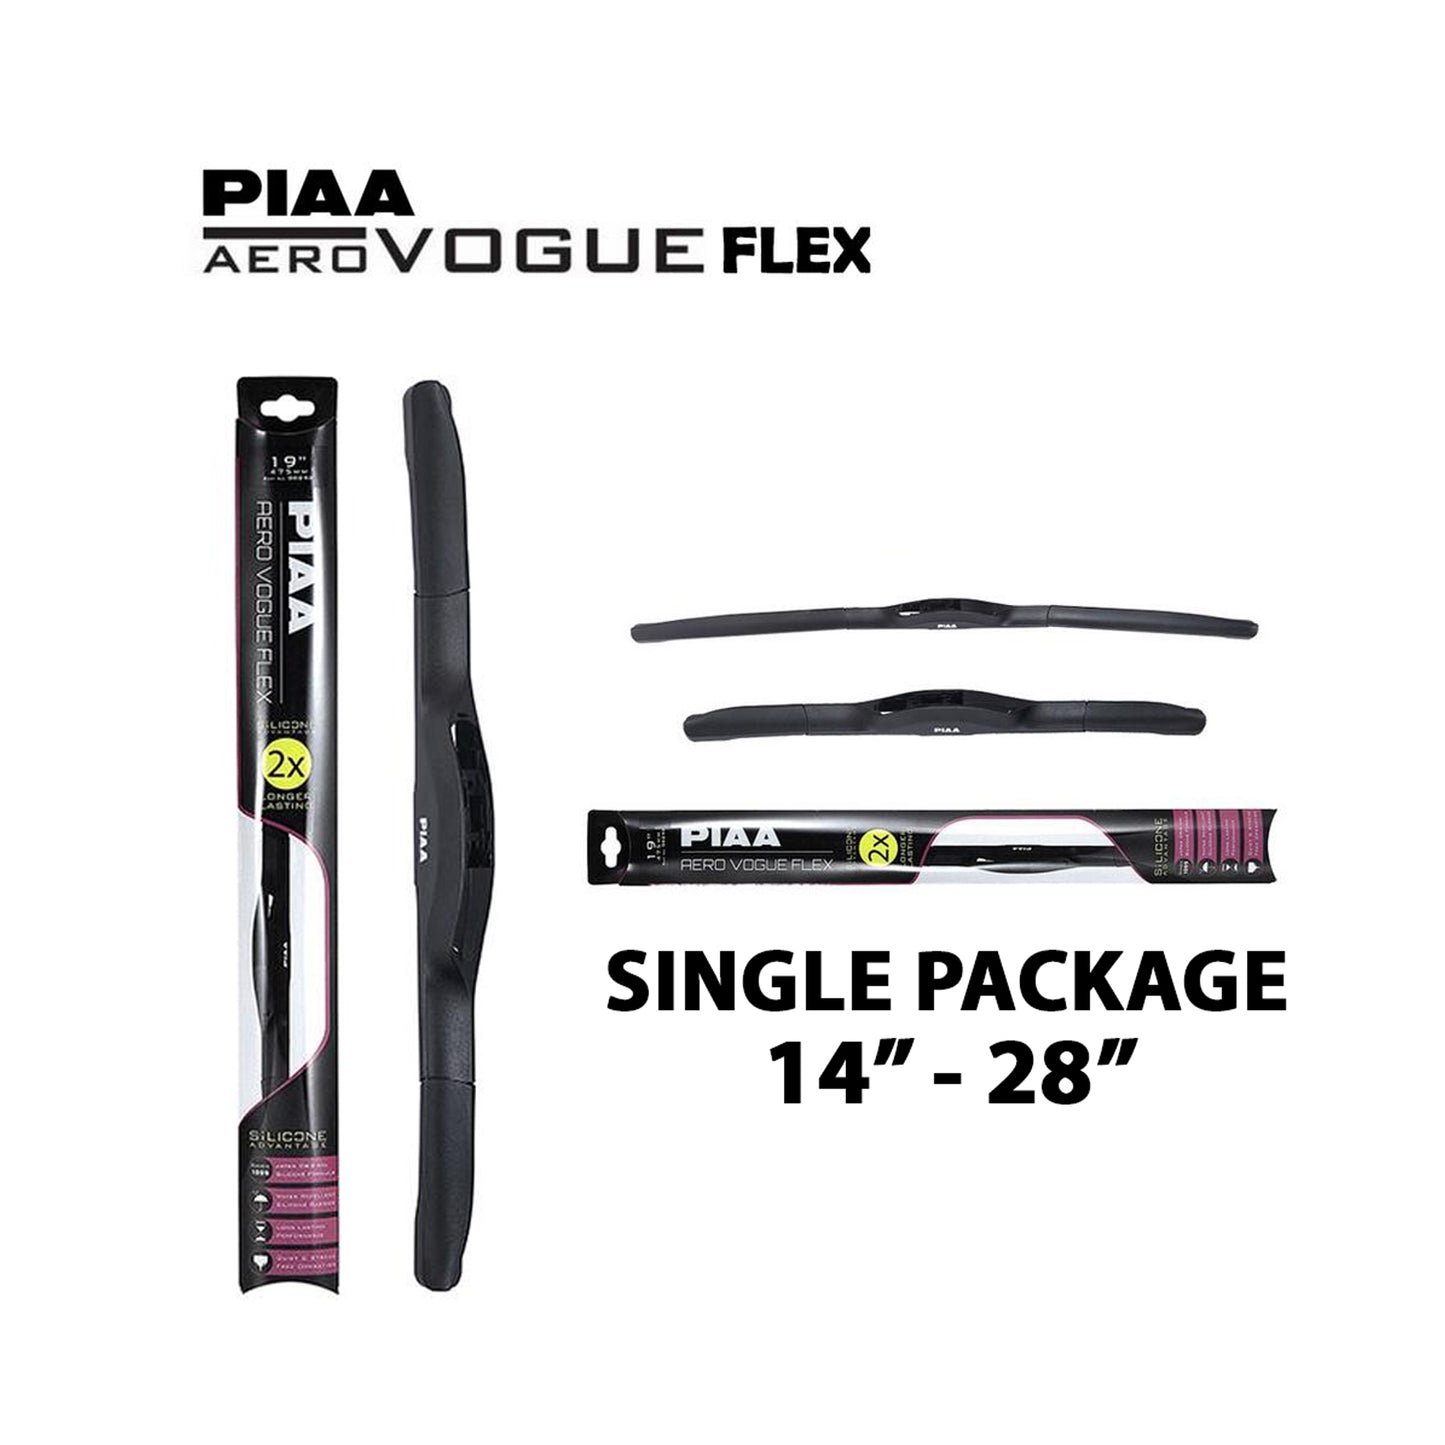 PIAA AERO VOGUE FLEX Car Wiper ( 19" ) - Black (Barcode: 4960311050957 )